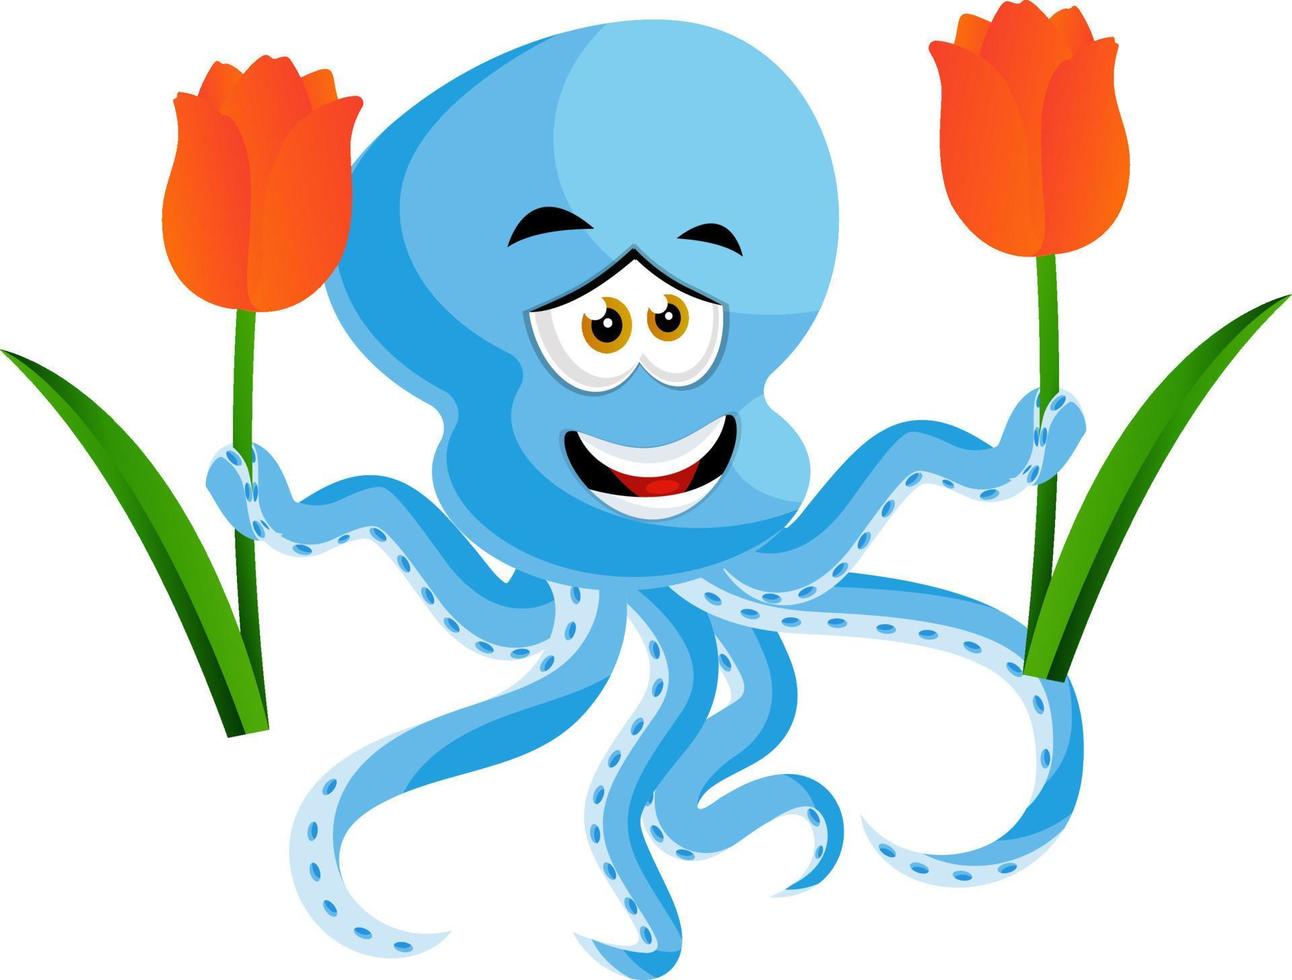 Octopus holding flowers, illustration, vector on white background.